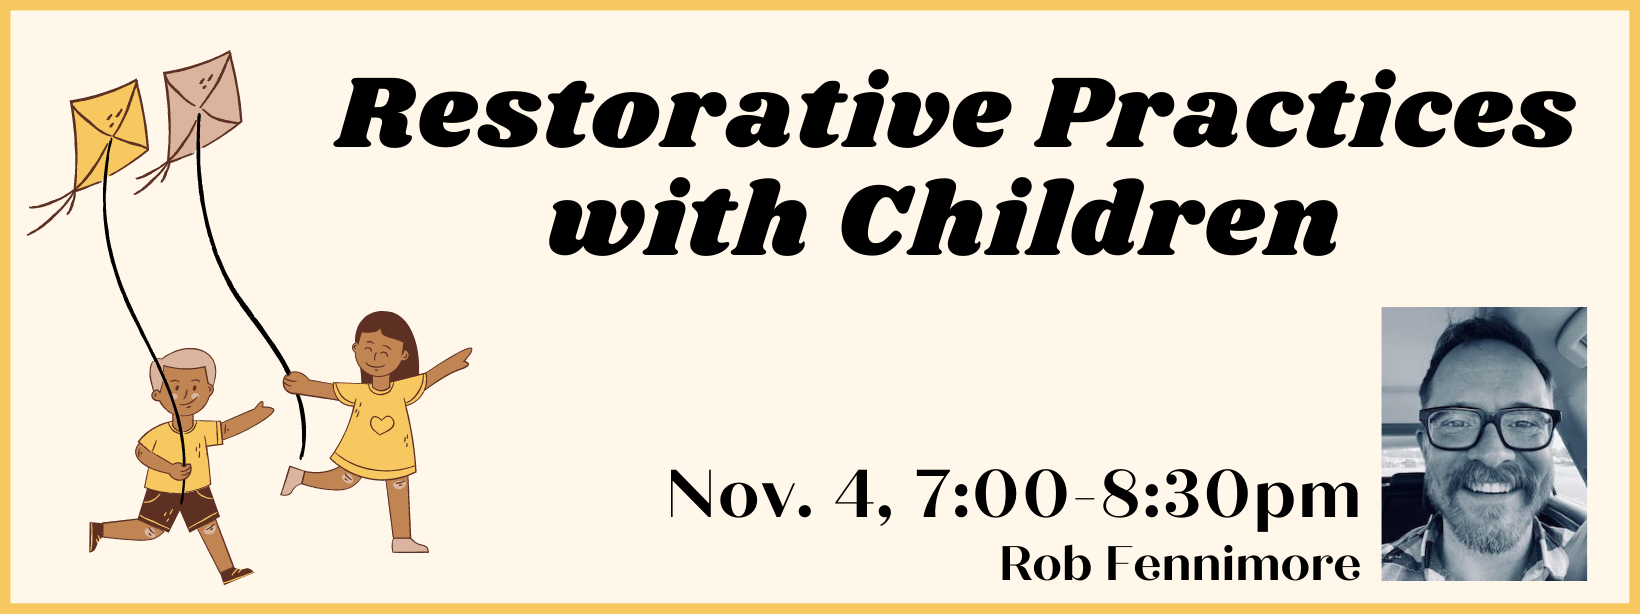 Restorative Practices with Children